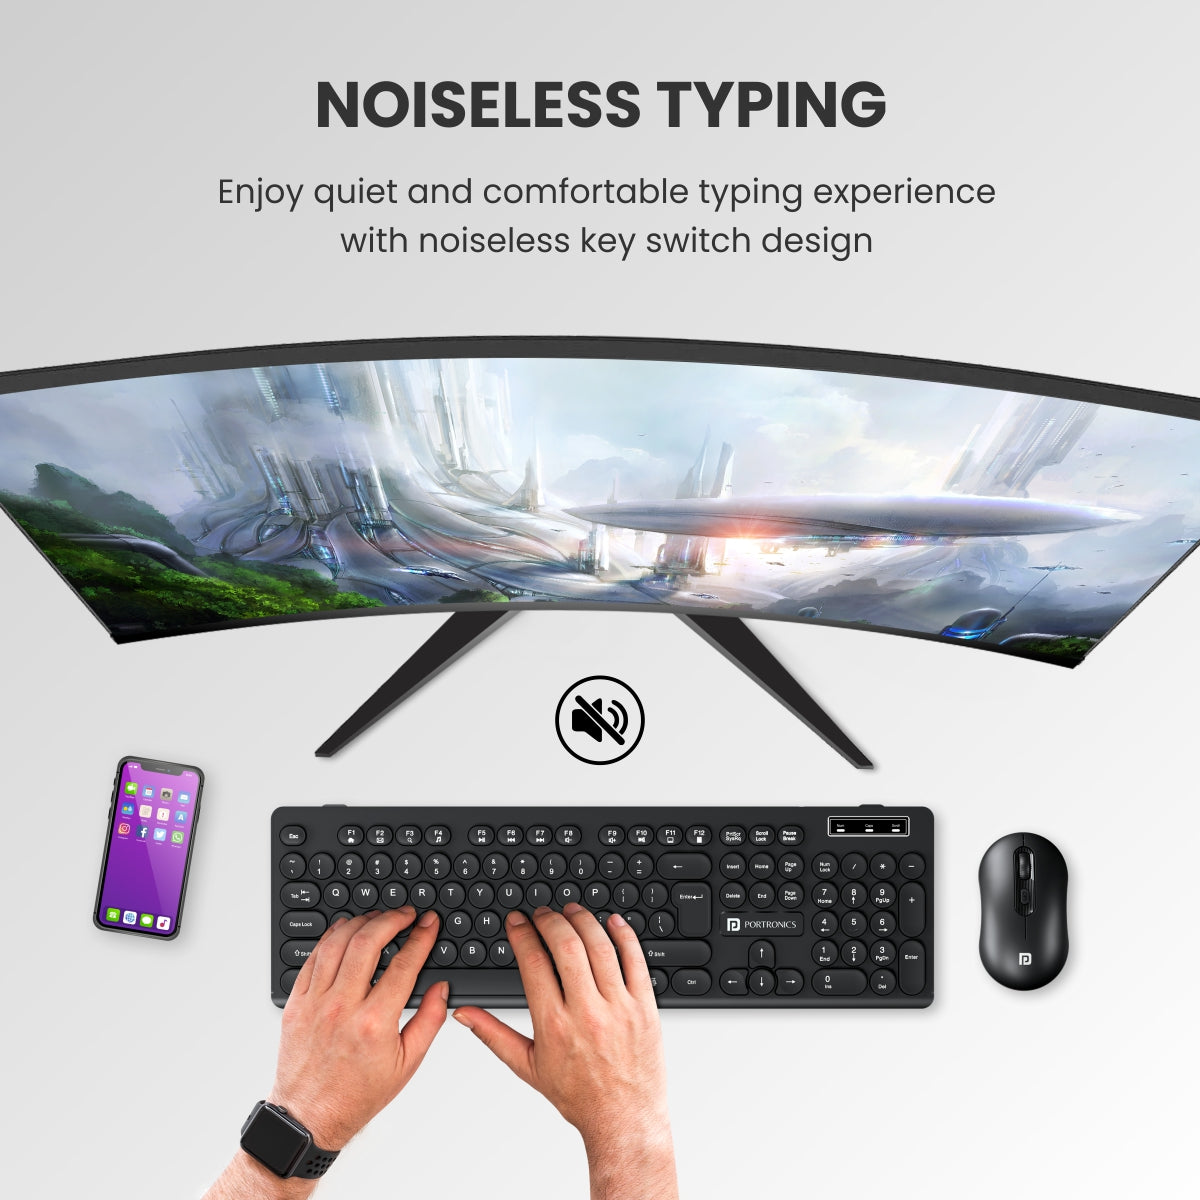 BLACK Portronics Key6 Wireless Keyboard has silent keypad feature| Mouse & keyboard Combo for laptop